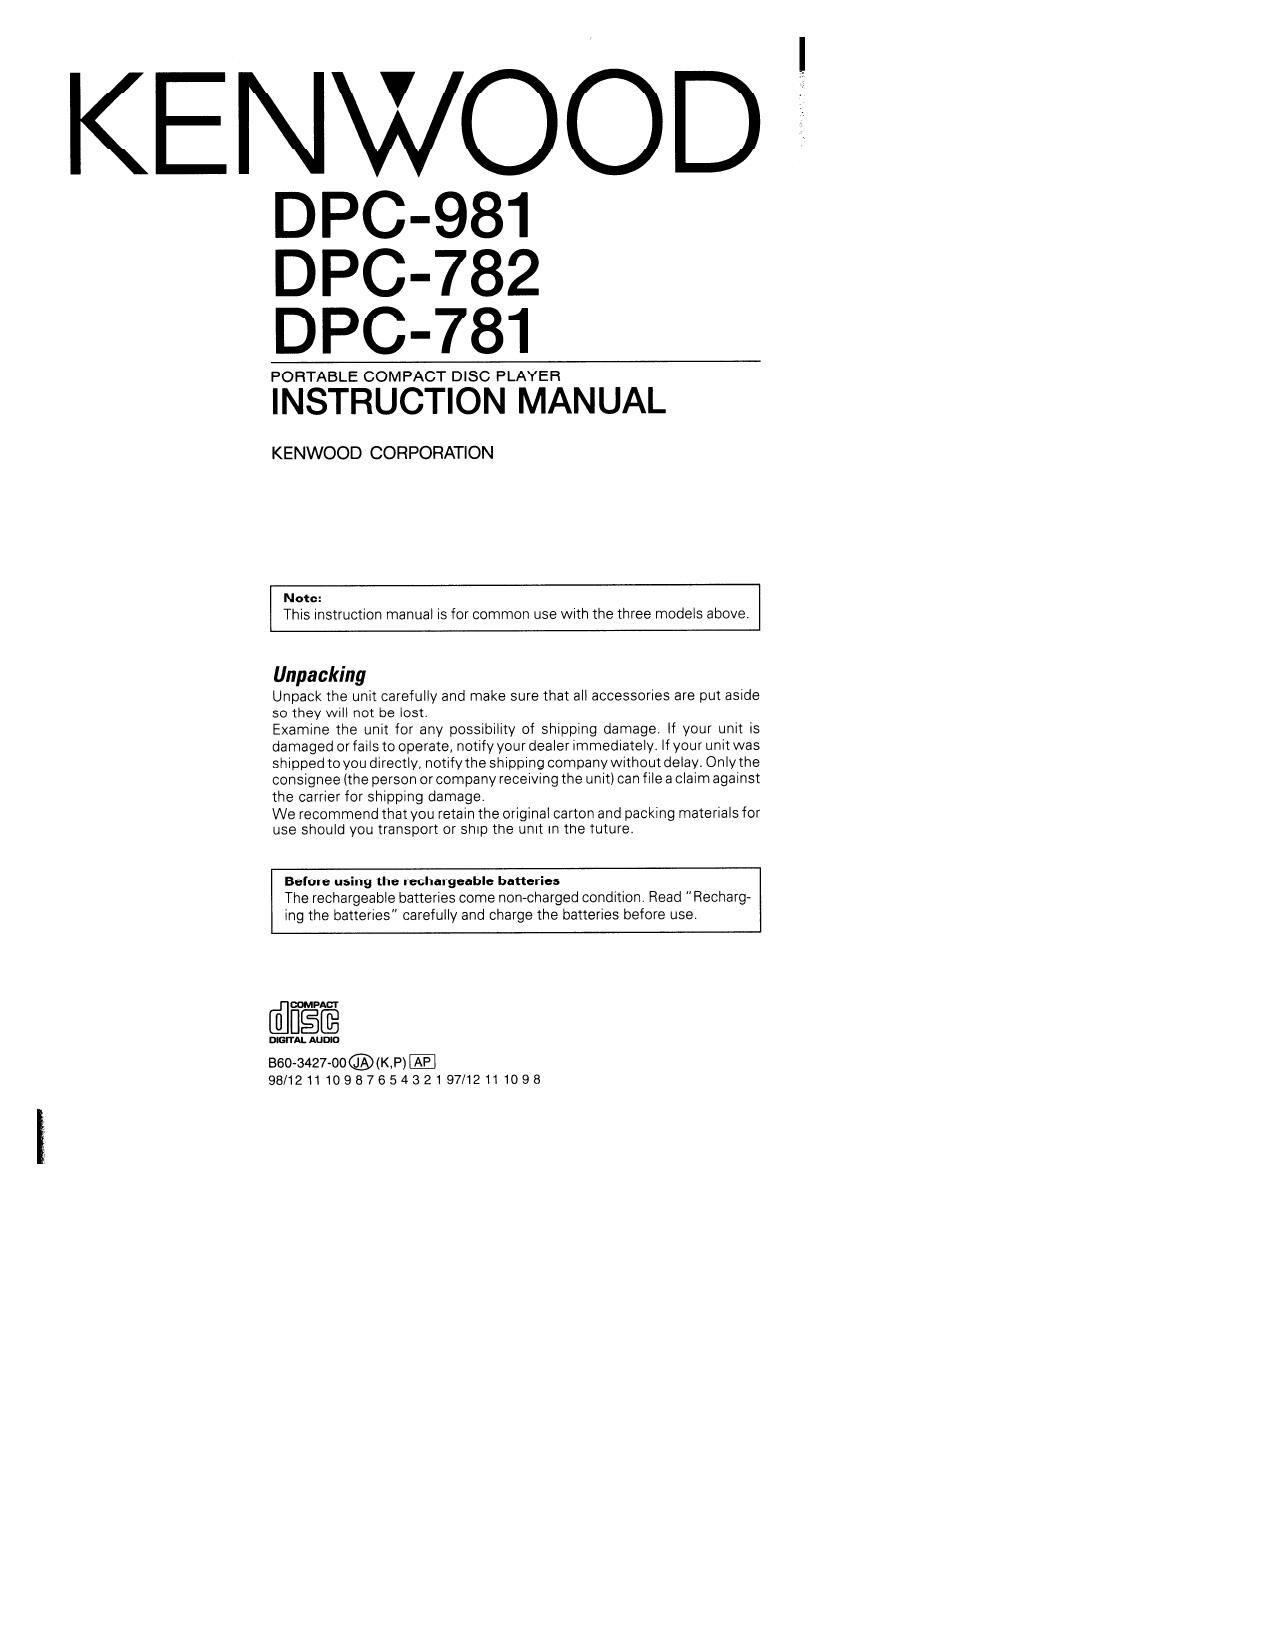 Kenwood DPC 782 Owners Manual